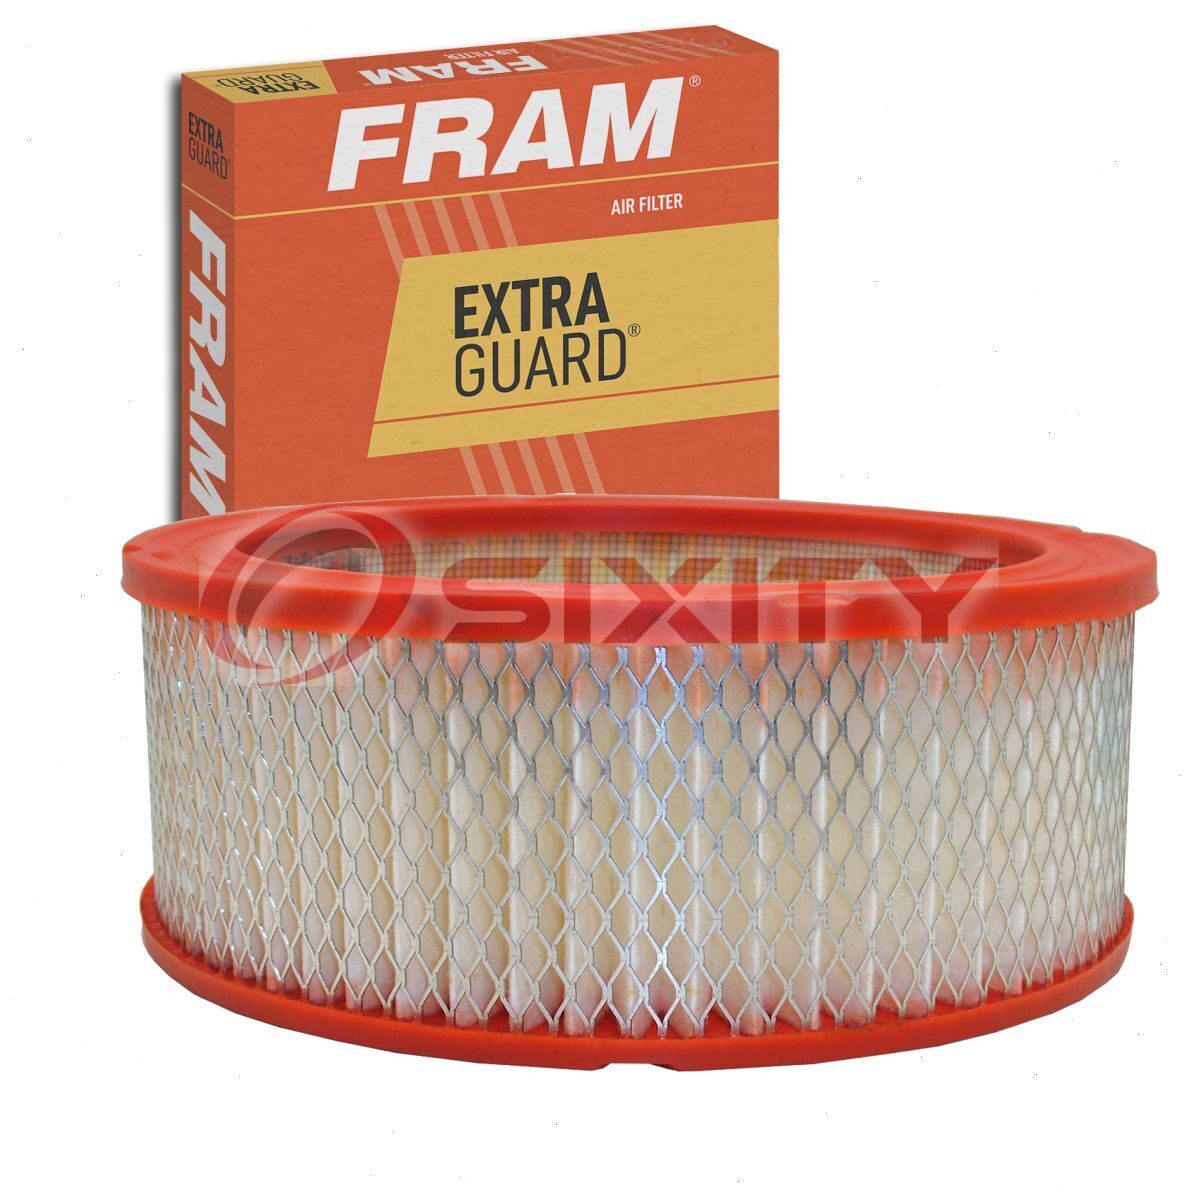 FRAM Extra Guard Air Filter for 1962-1963 Mercury Meteor Intake Inlet vu